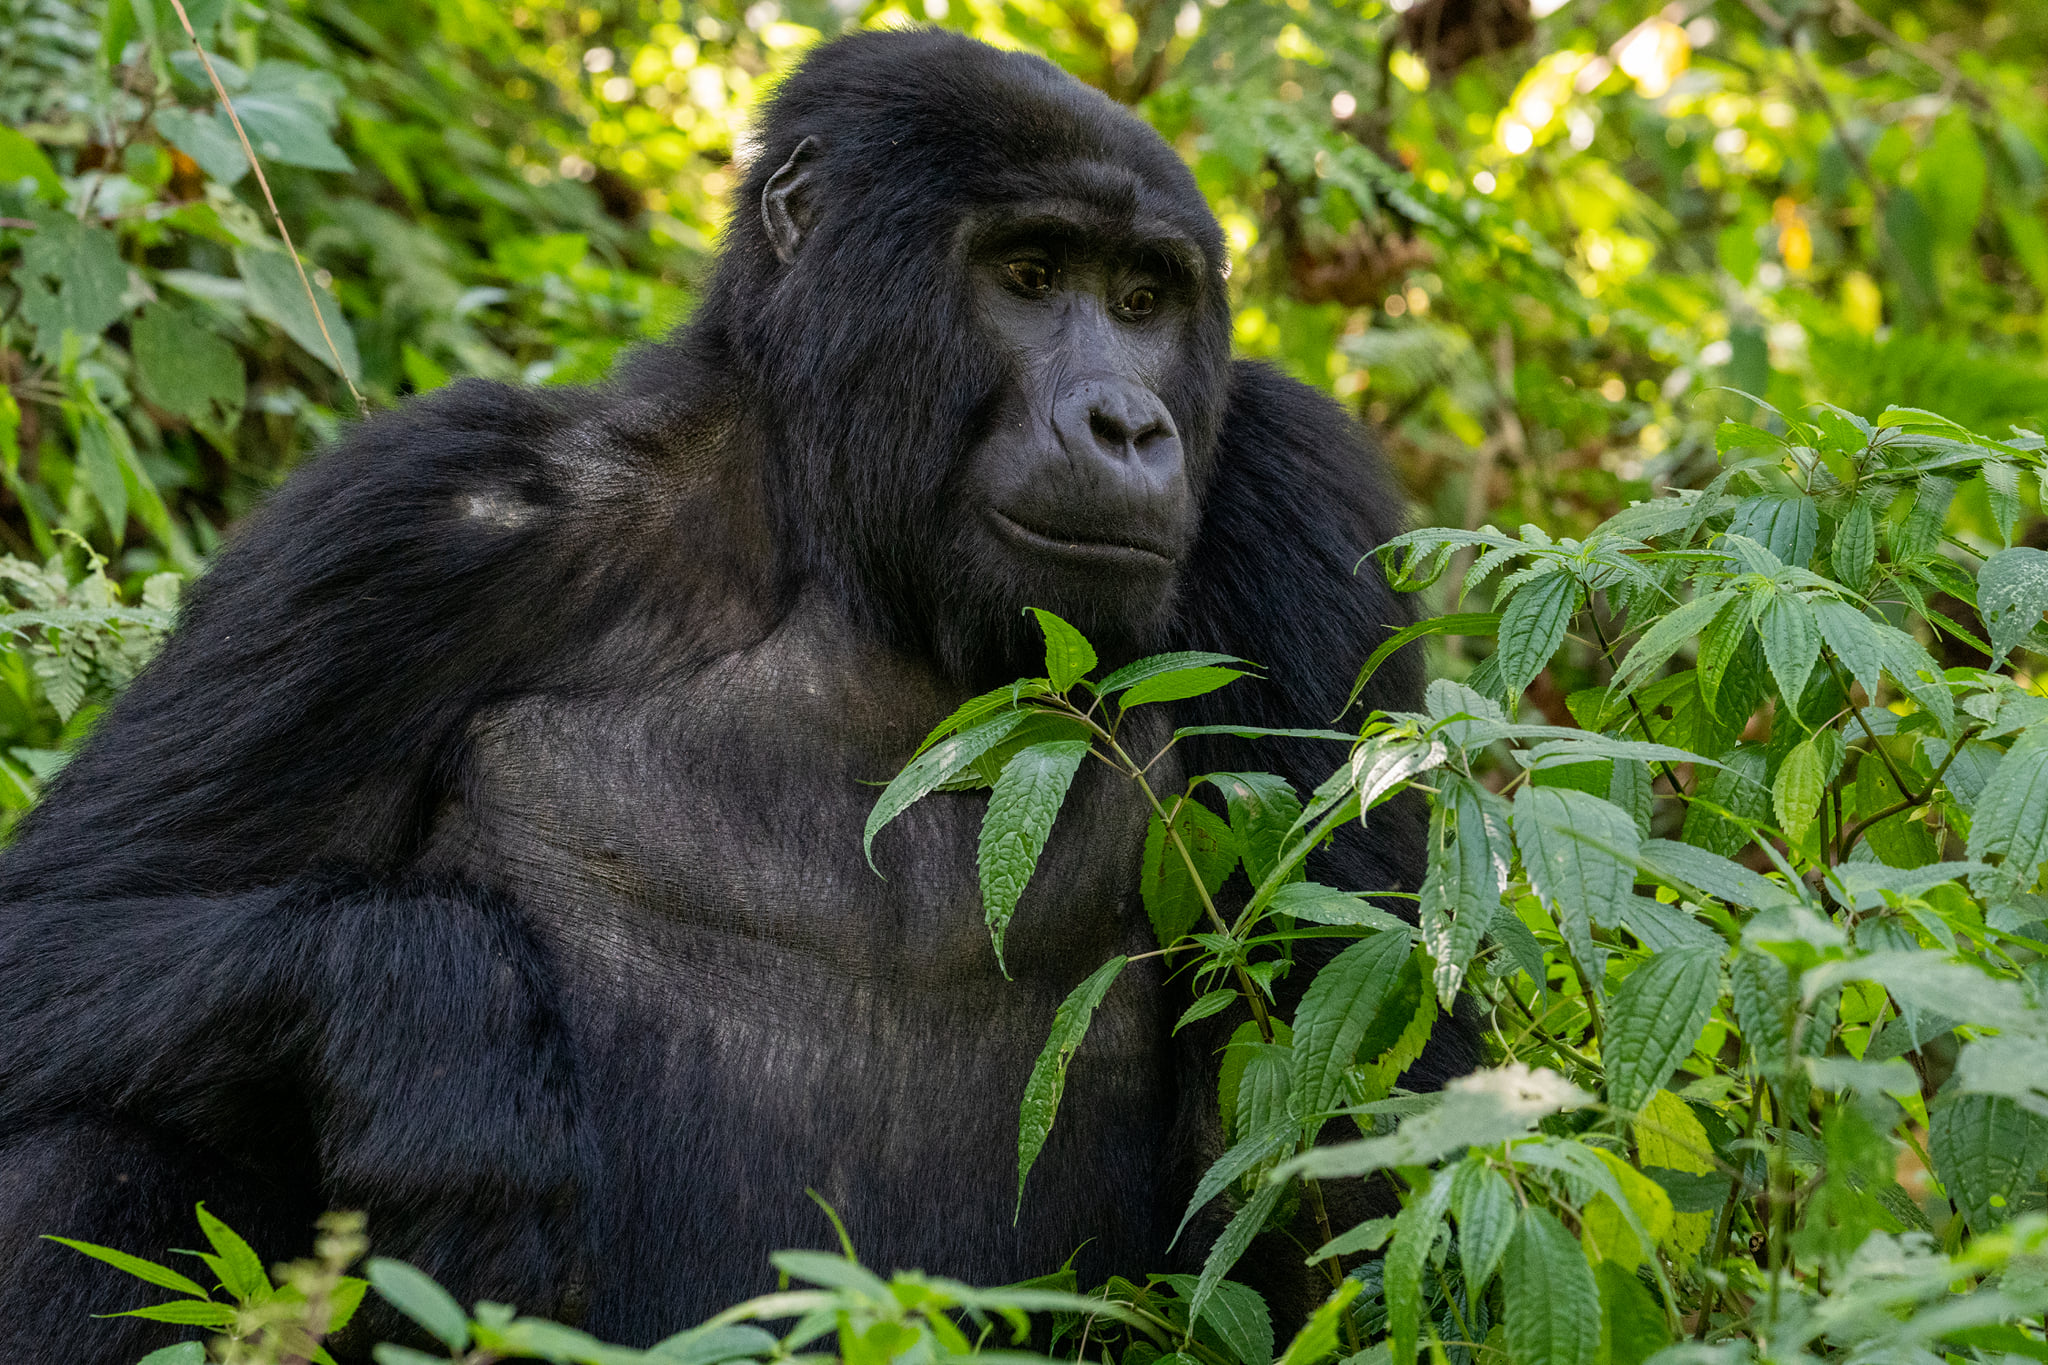 Filming in Virunga National Park in Democratic Republic of Congo